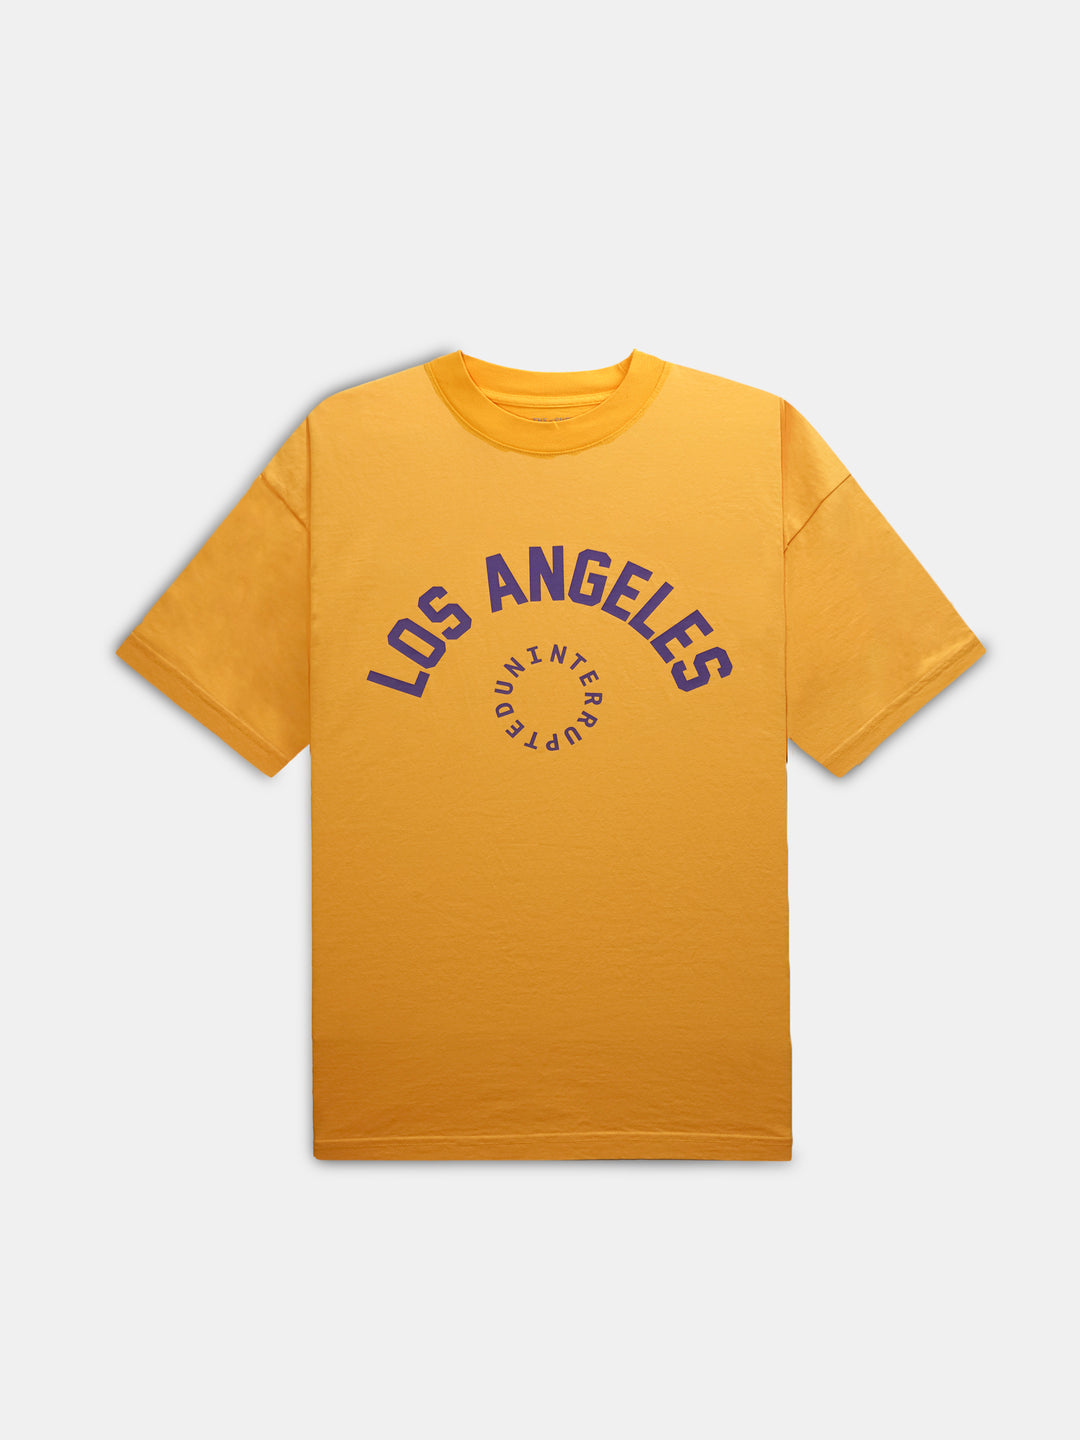 Los Angeles Circle Logo Tee Gold front